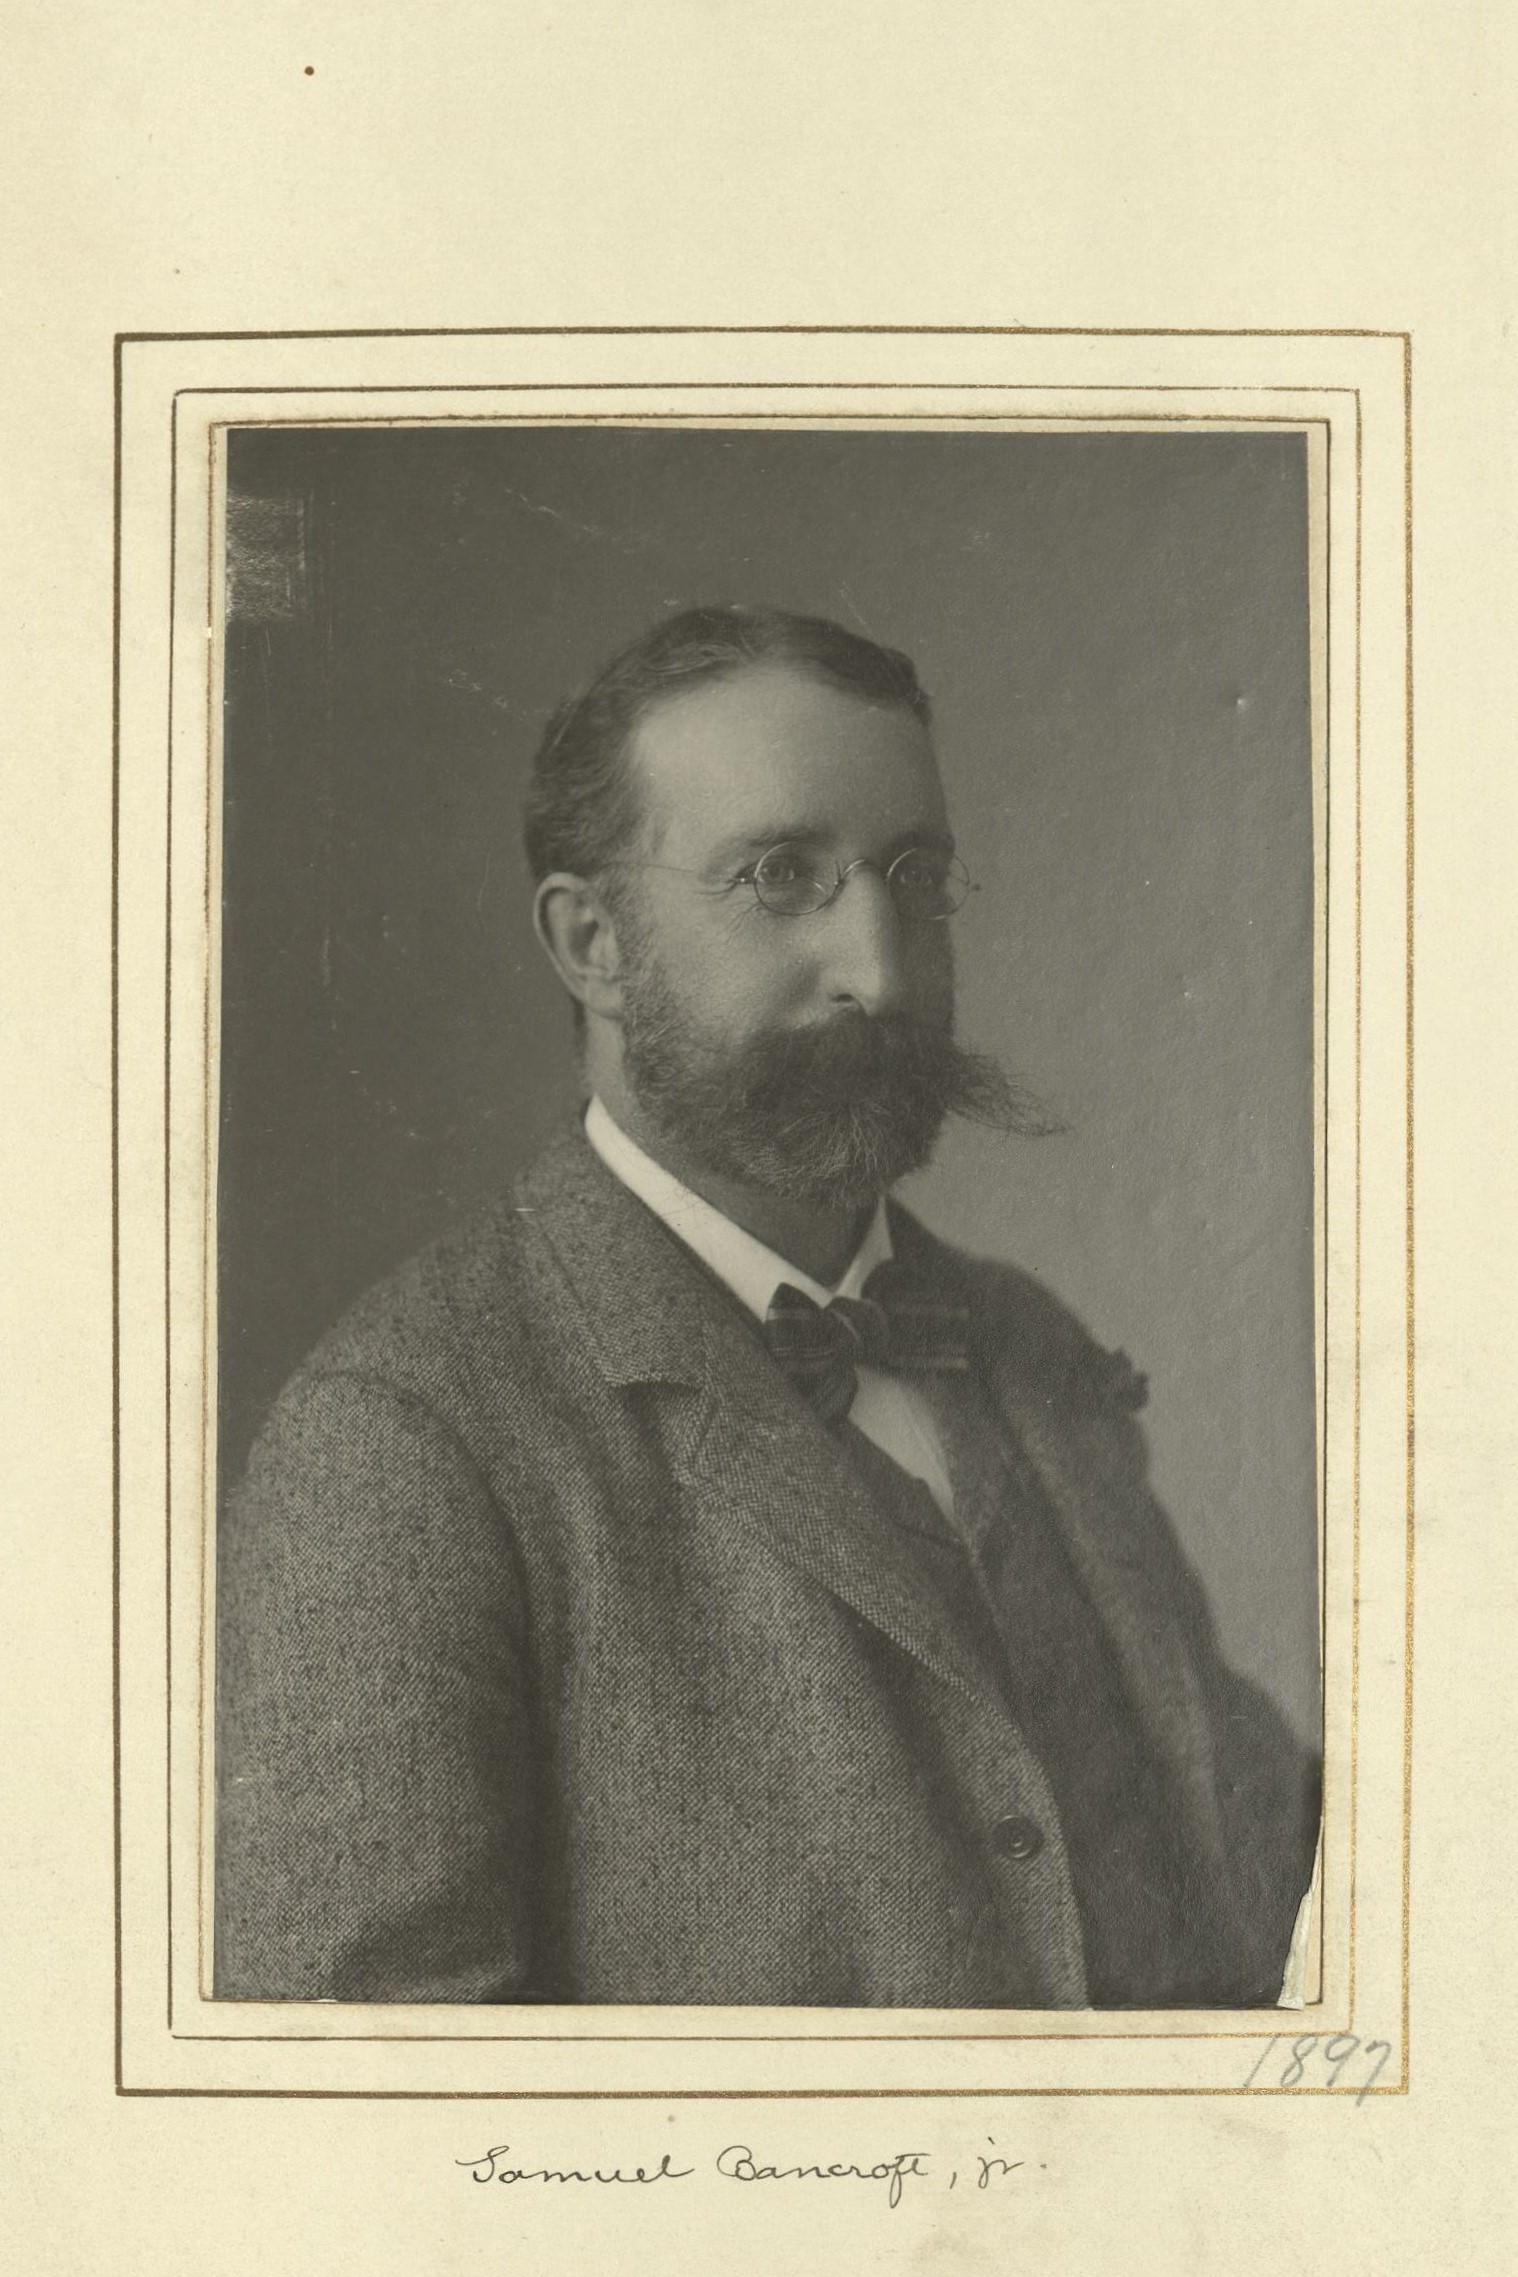 Member portrait of Samuel Bancroft Jr.